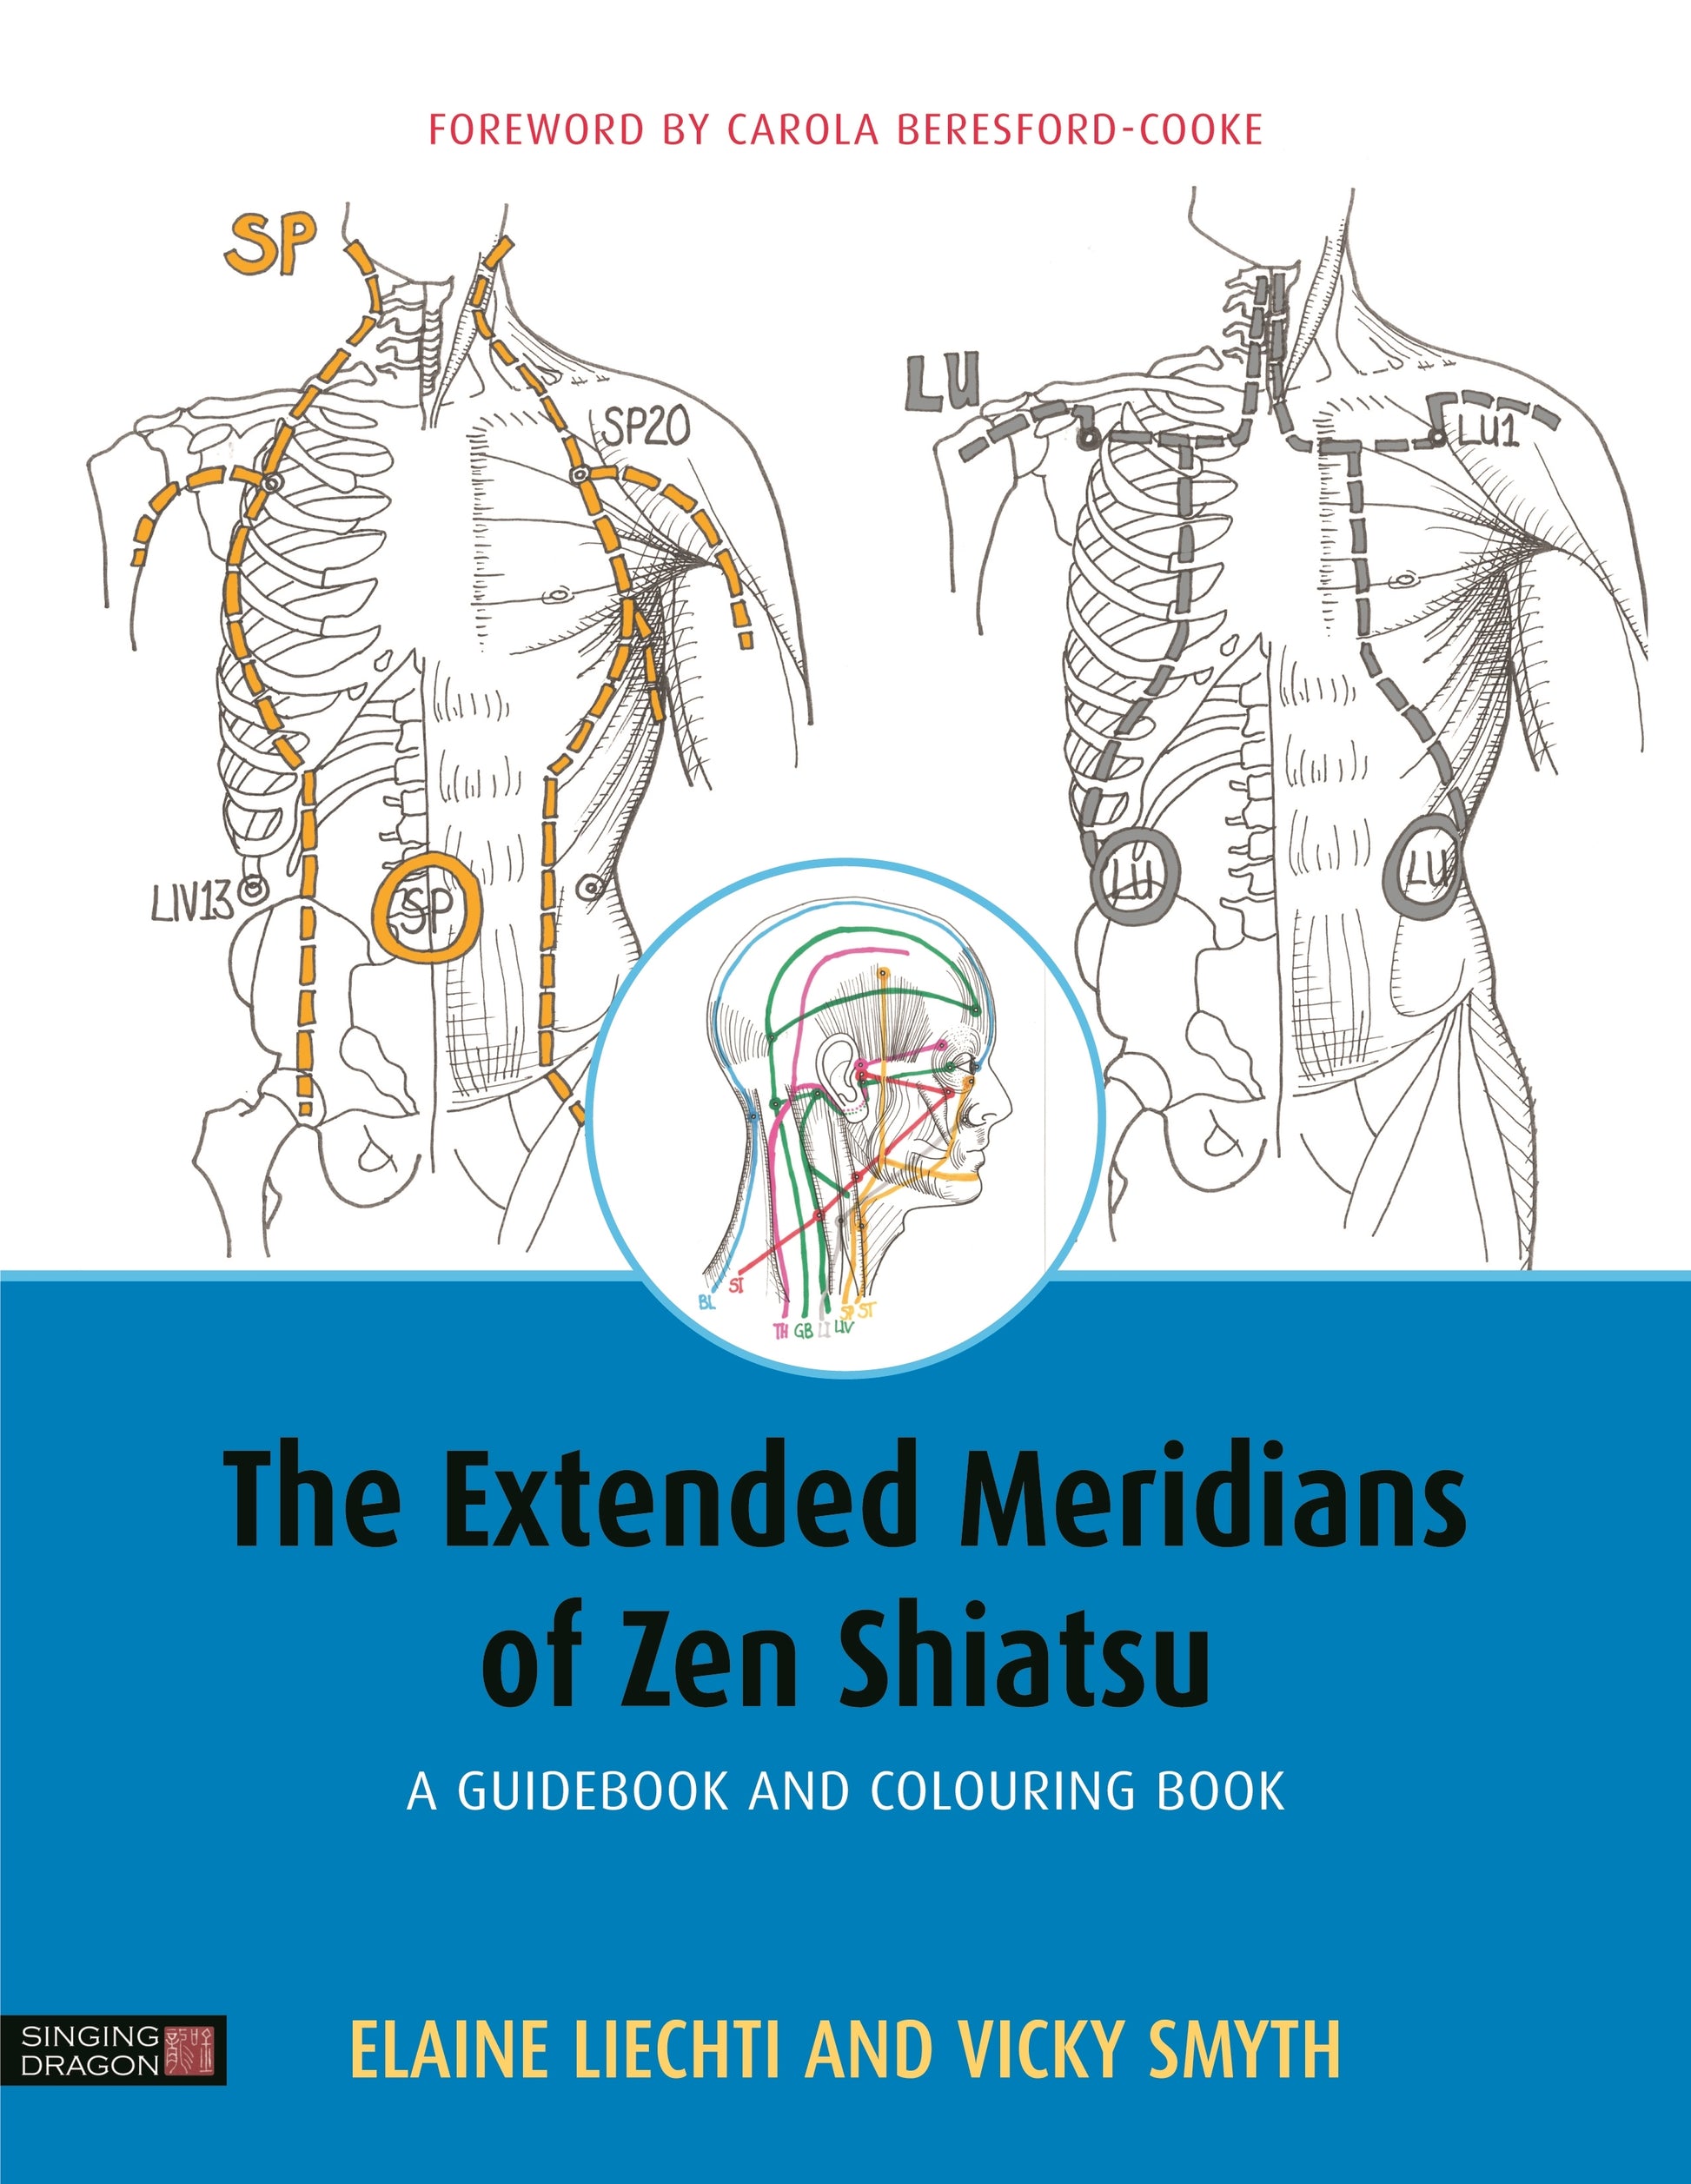 The Extended Meridians of Zen Shiatsu by Carola Beresford-Cooke, Elaine Liechti, Vicky Smyth